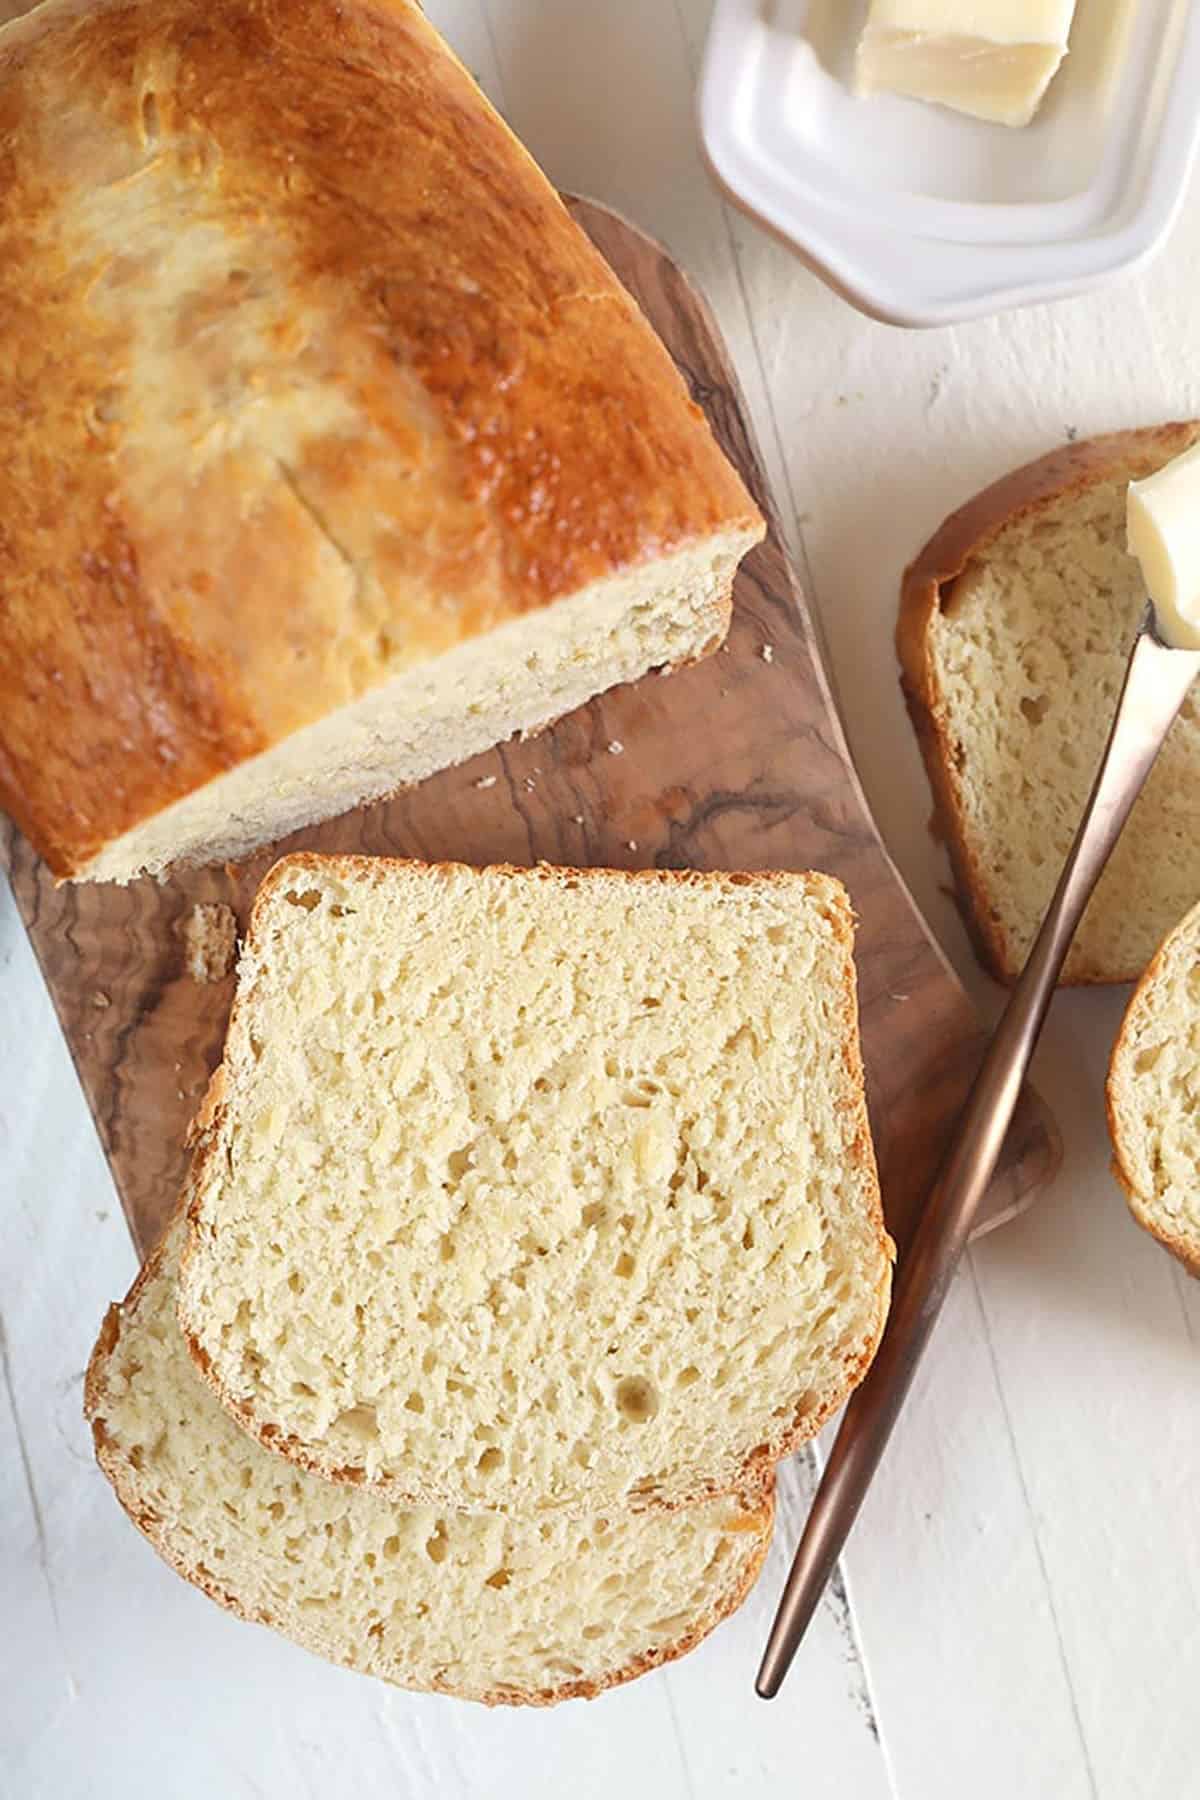 https://thesuburbansoapbox.com/wp-content/uploads/2021/04/Homemade-White-Bread-6.jpg